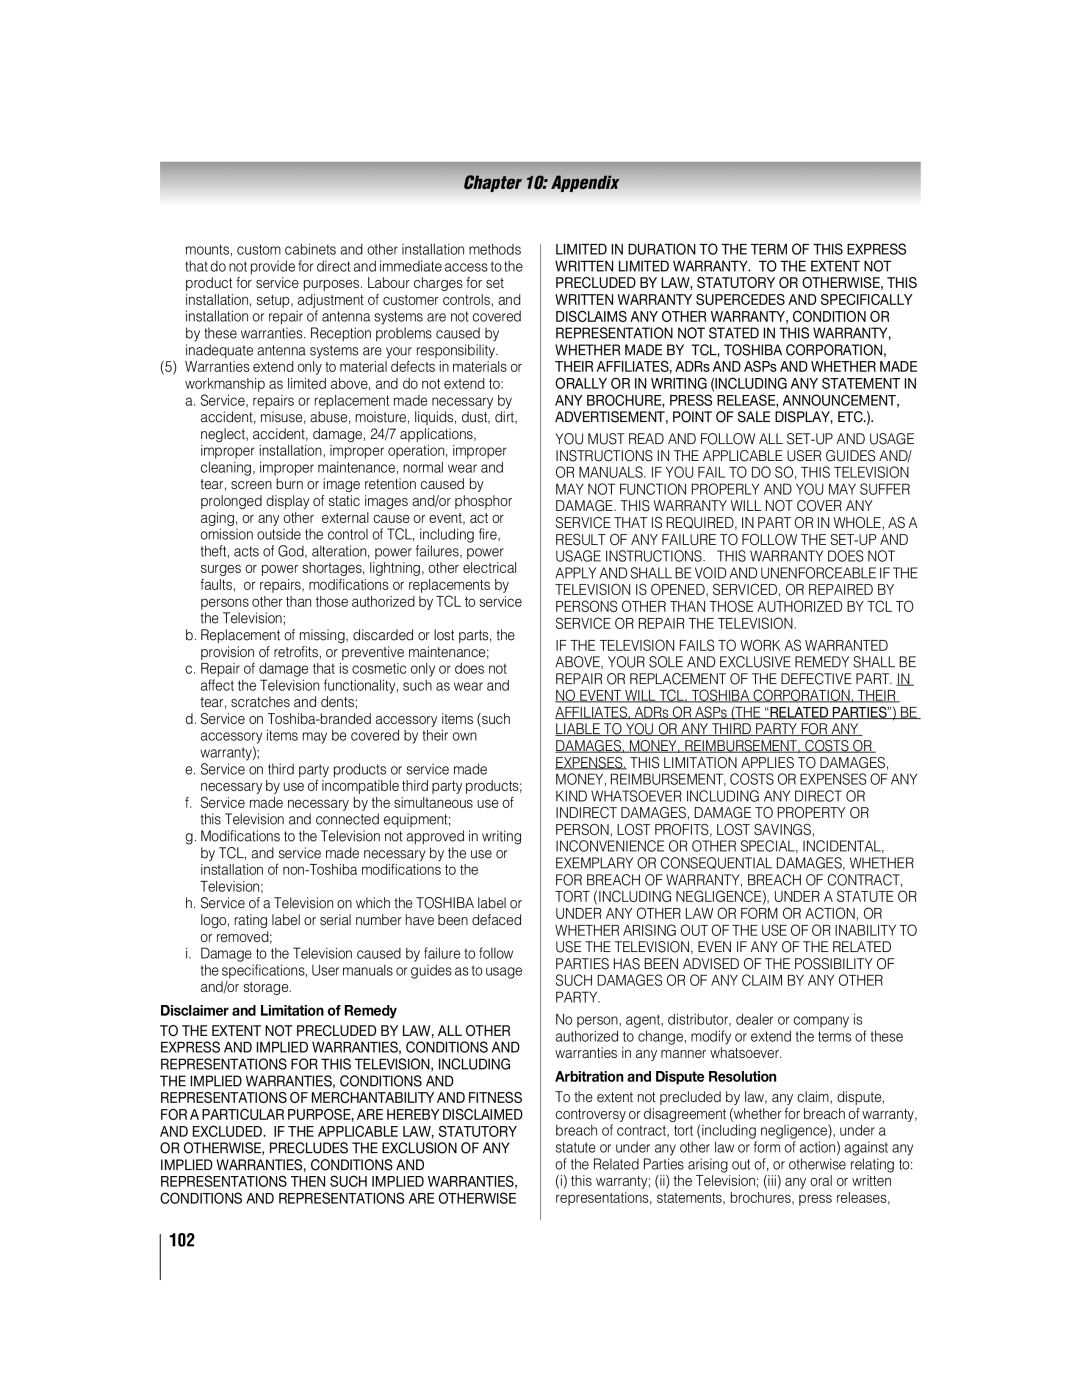 Toshiba 46WX800U, 55WX800U manual Appendix, Disclaimer and Limitation of Remedy, Arbitration and Dispute Resolution 